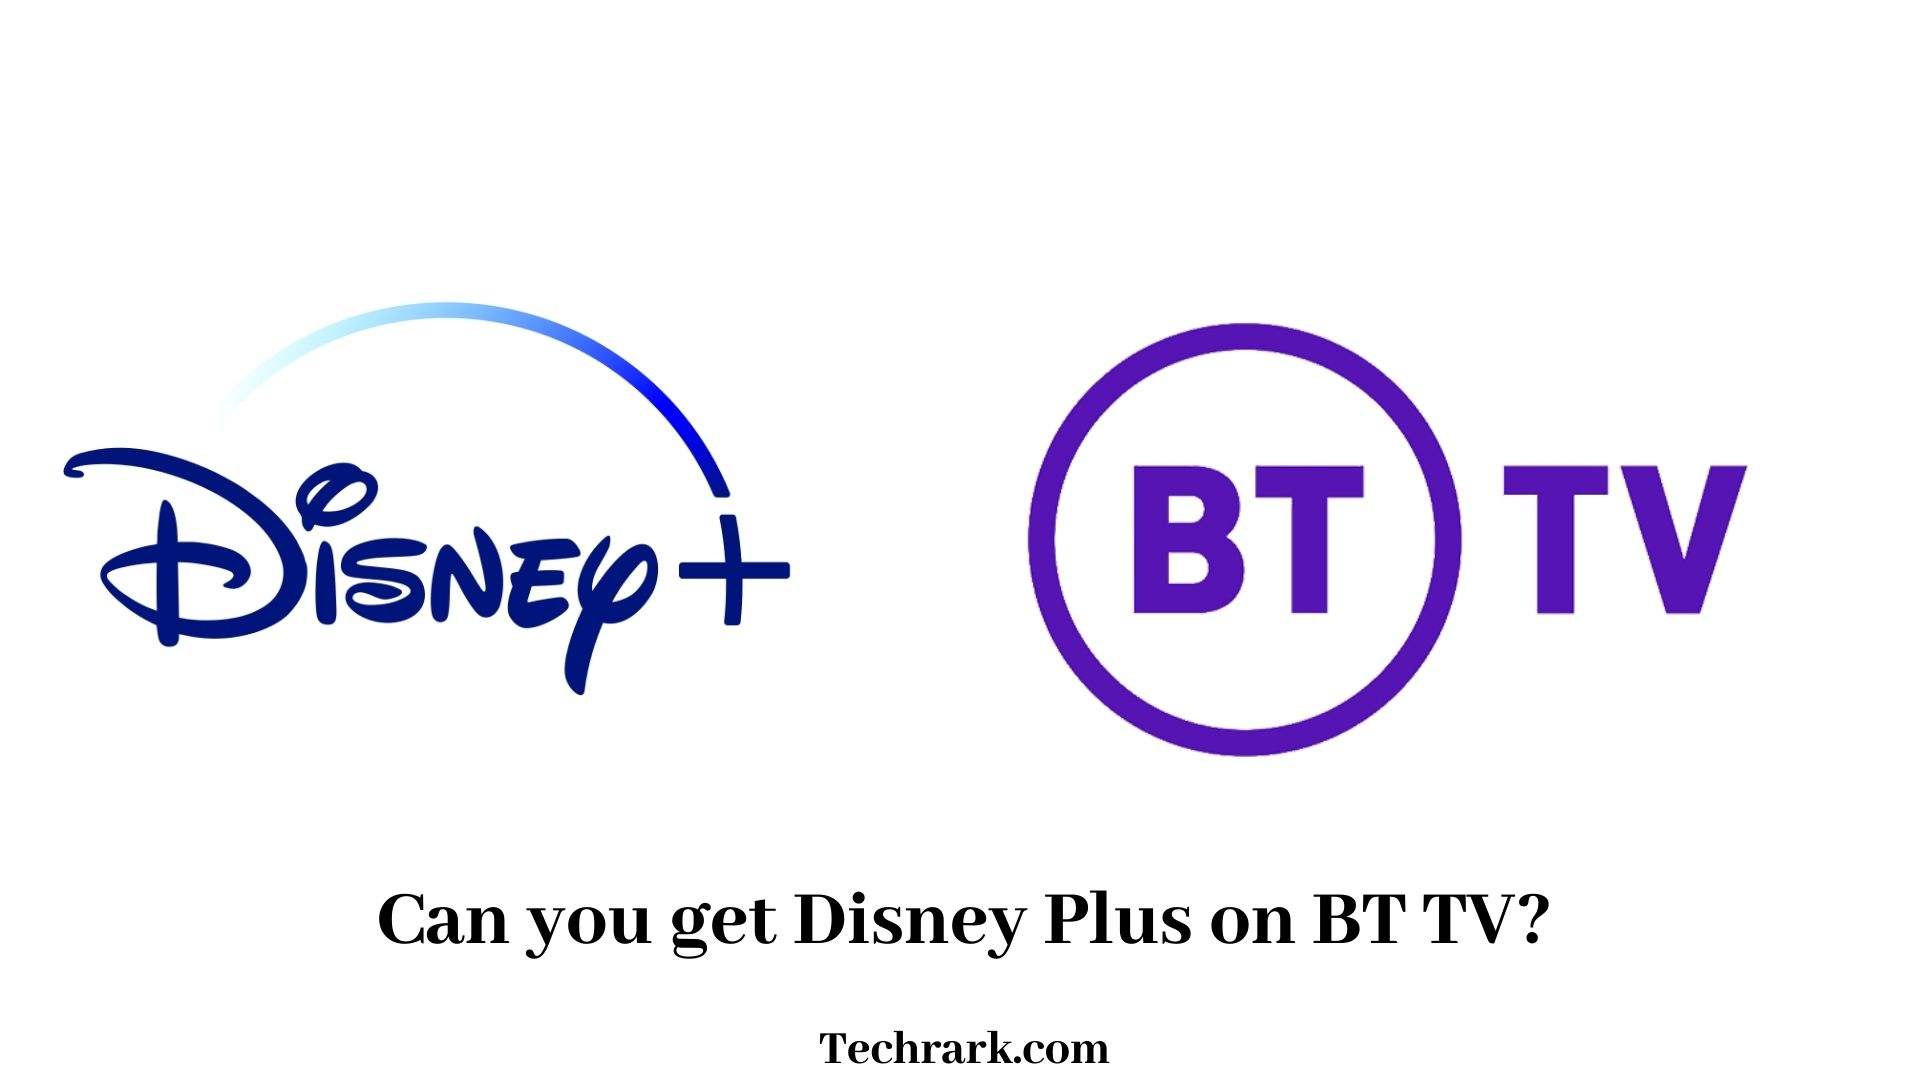 Disney Plus on BT TV